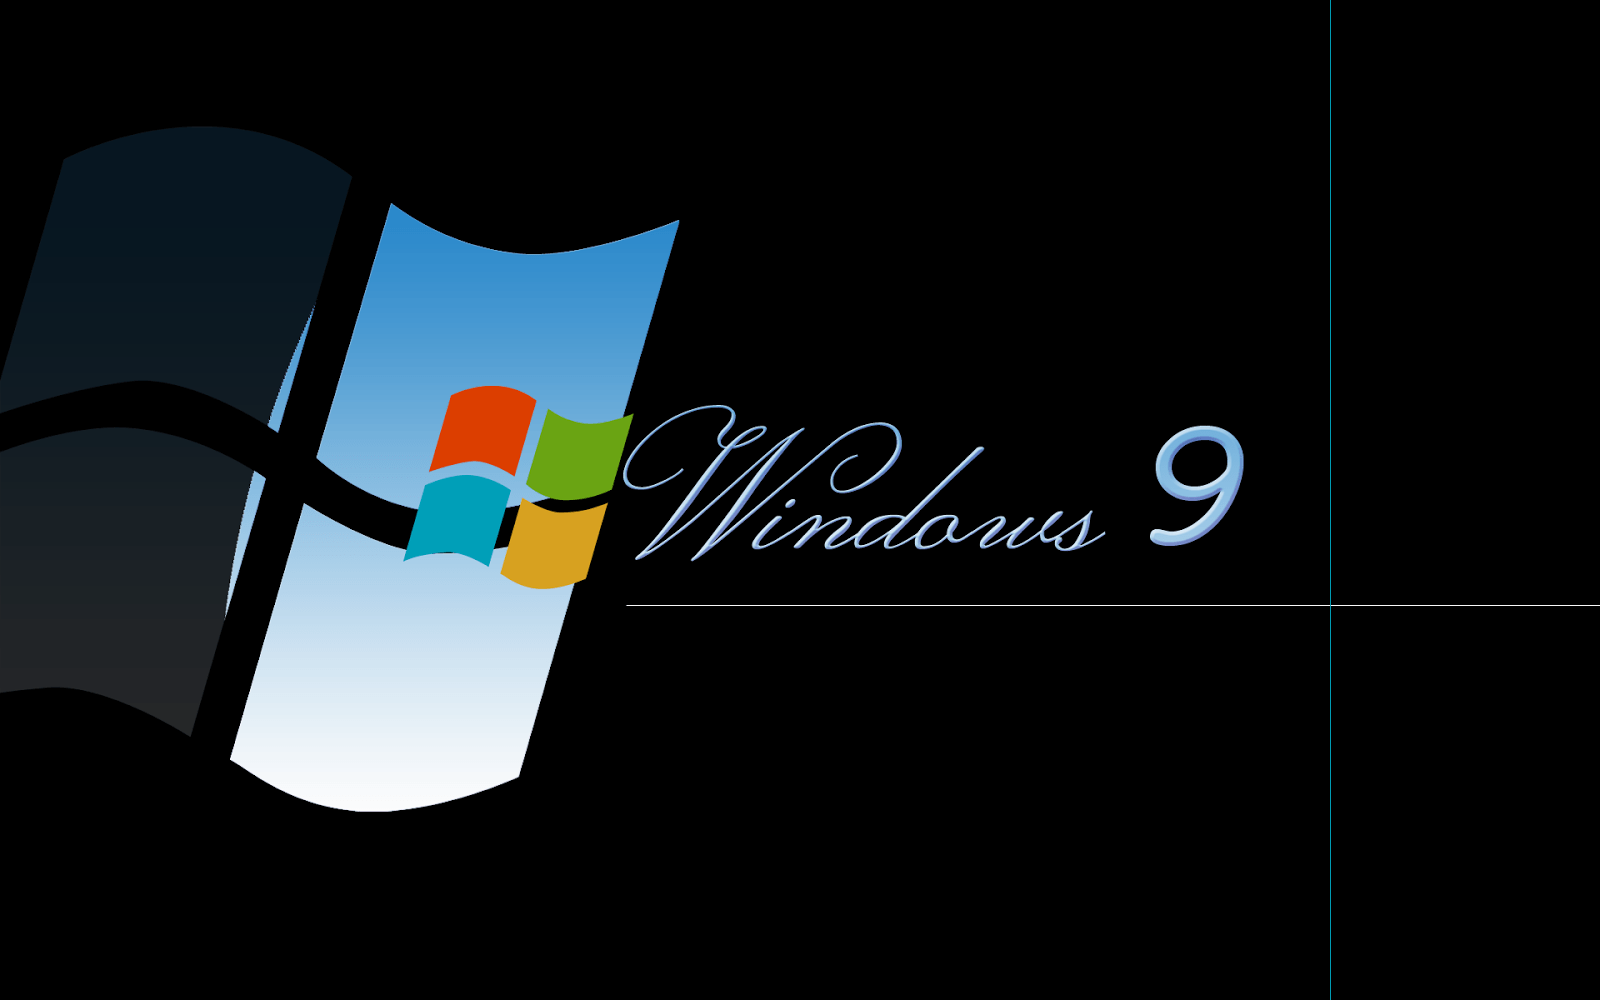 Windows 9 Wallpaper 2